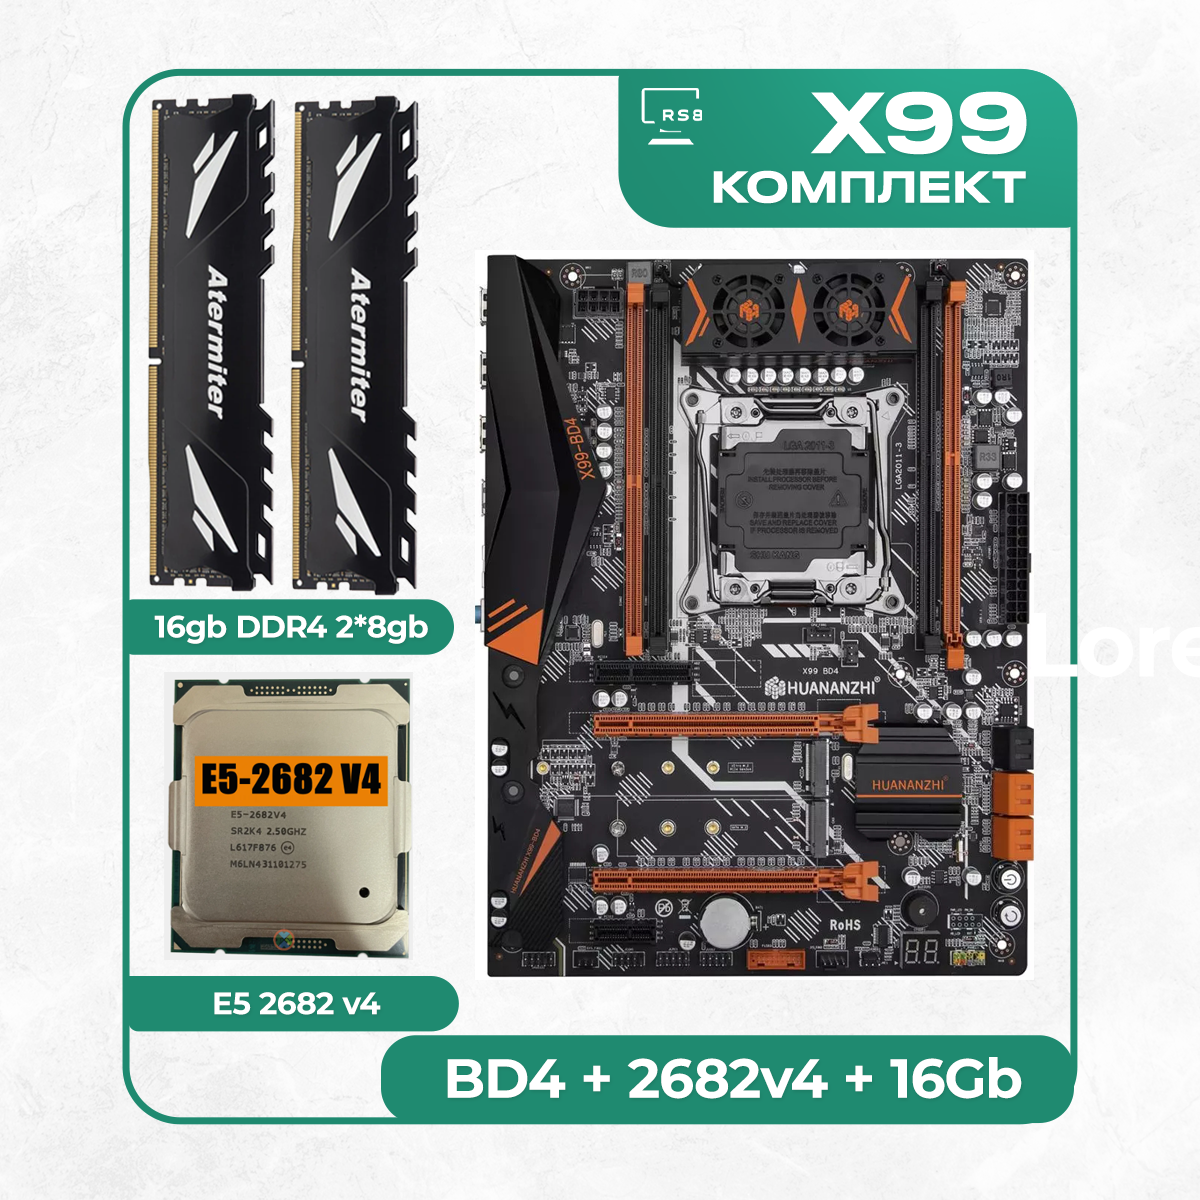 Комплект материнской платы X99: Huananzhi BD4 + Xeon E5 2682v4 + DDR4 16Гб 2666Мгц Atermiter